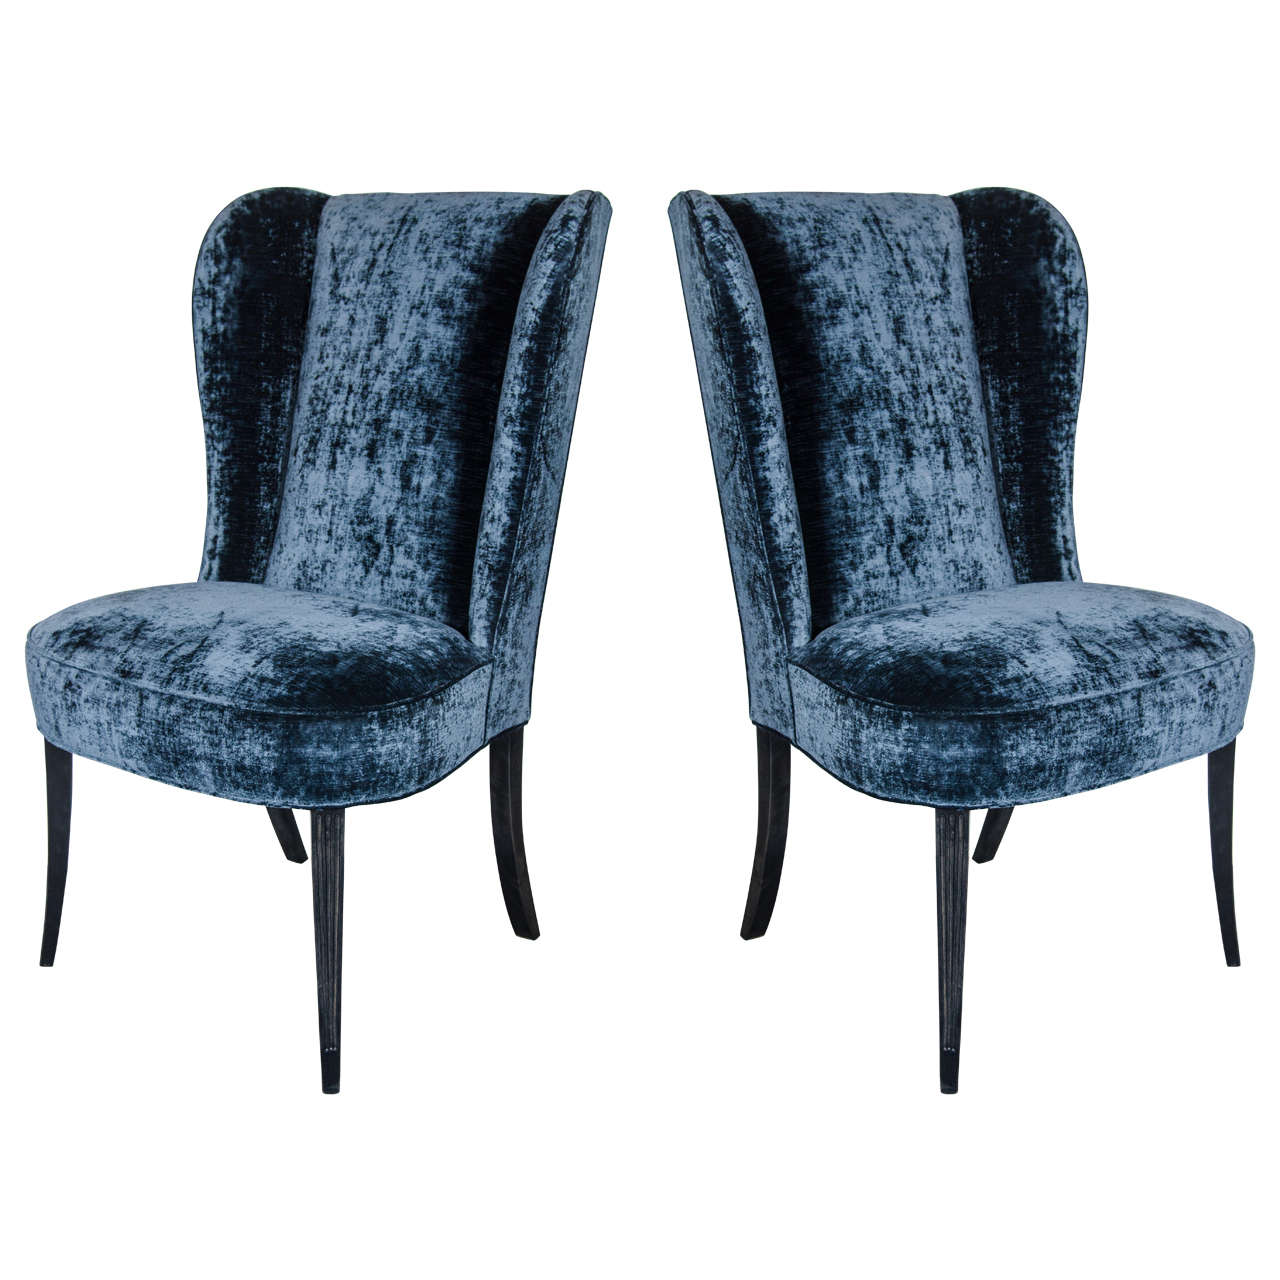 Brilliant Pair of Mid-Century Modernist Sapphire Blue Velvet Occasional Chairs